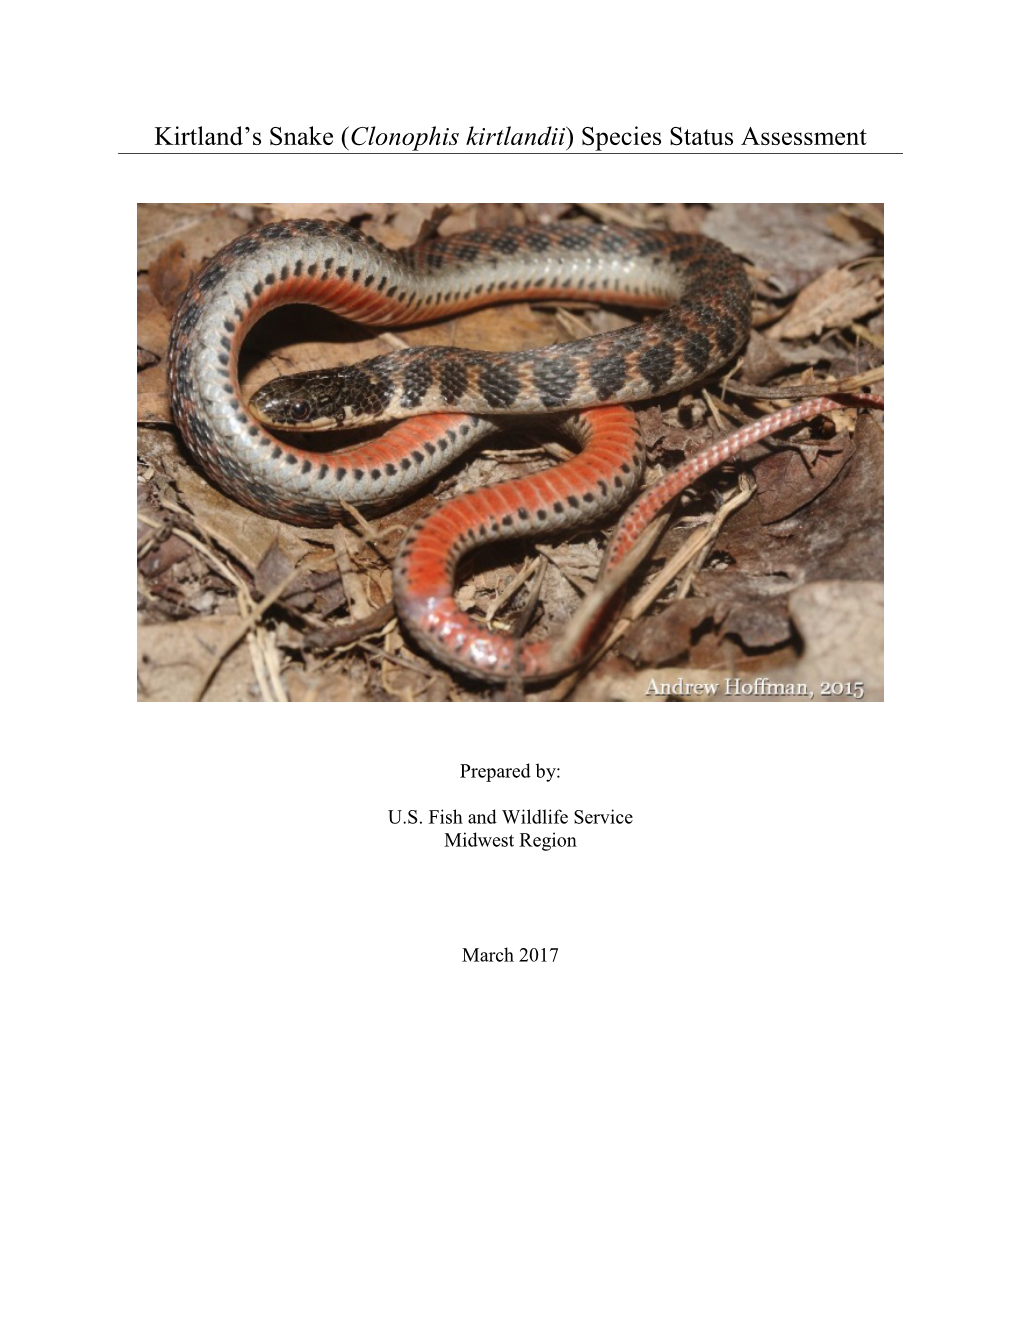 Species Status Assessment for Kirtland's Snake (Clonophis Kirtlandii)